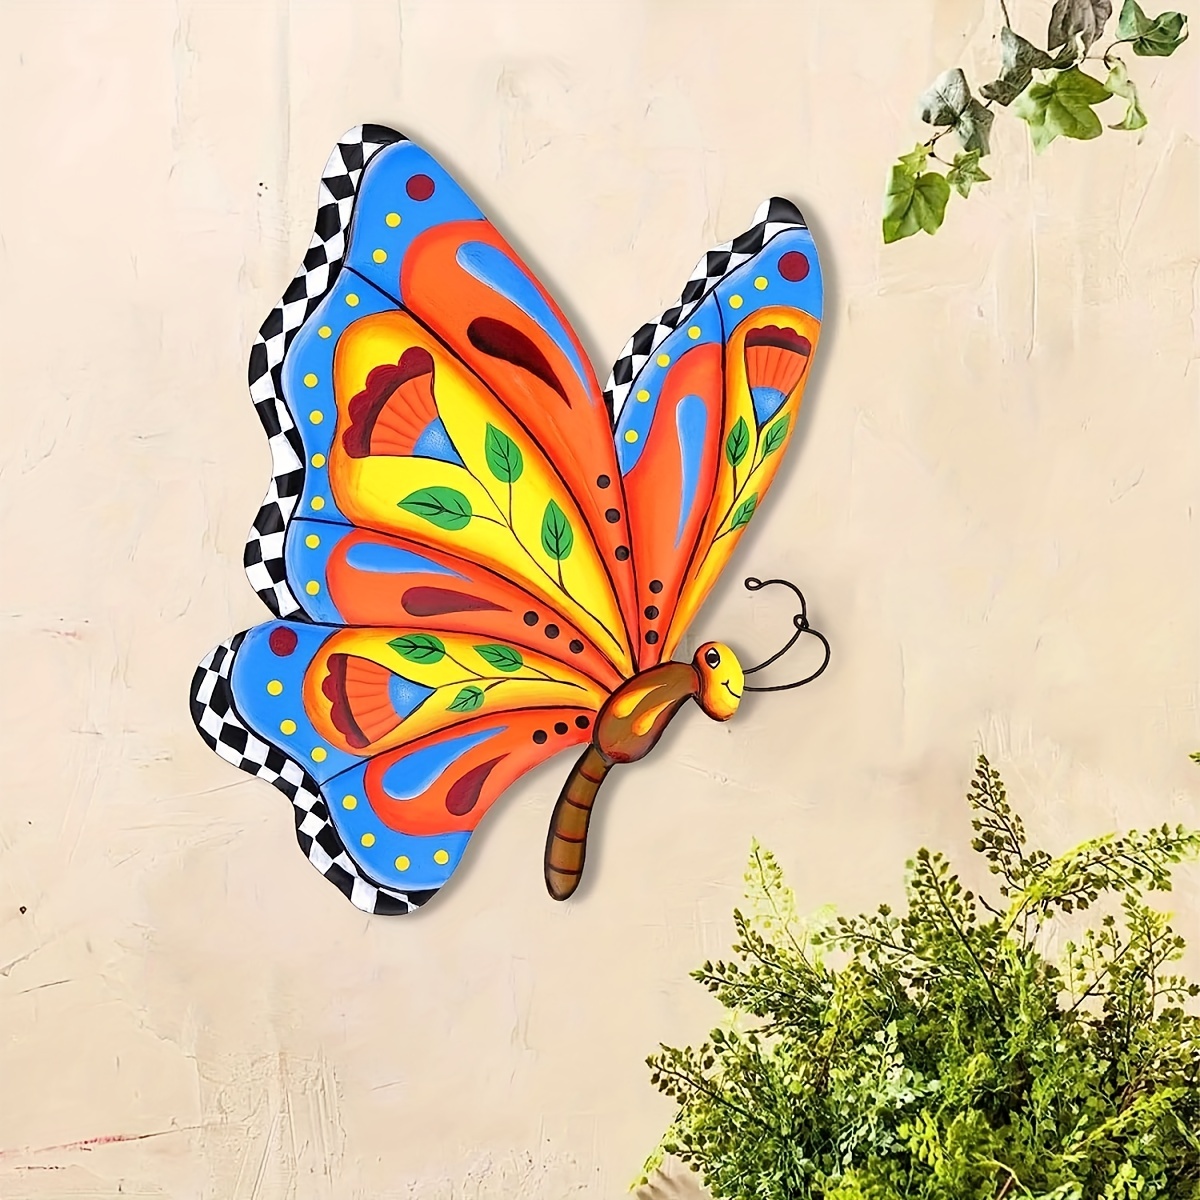 Trio de mariposas decorativa de arte, naturaleza inspirado pared de metal ,  colgar en interiores o al aire libre